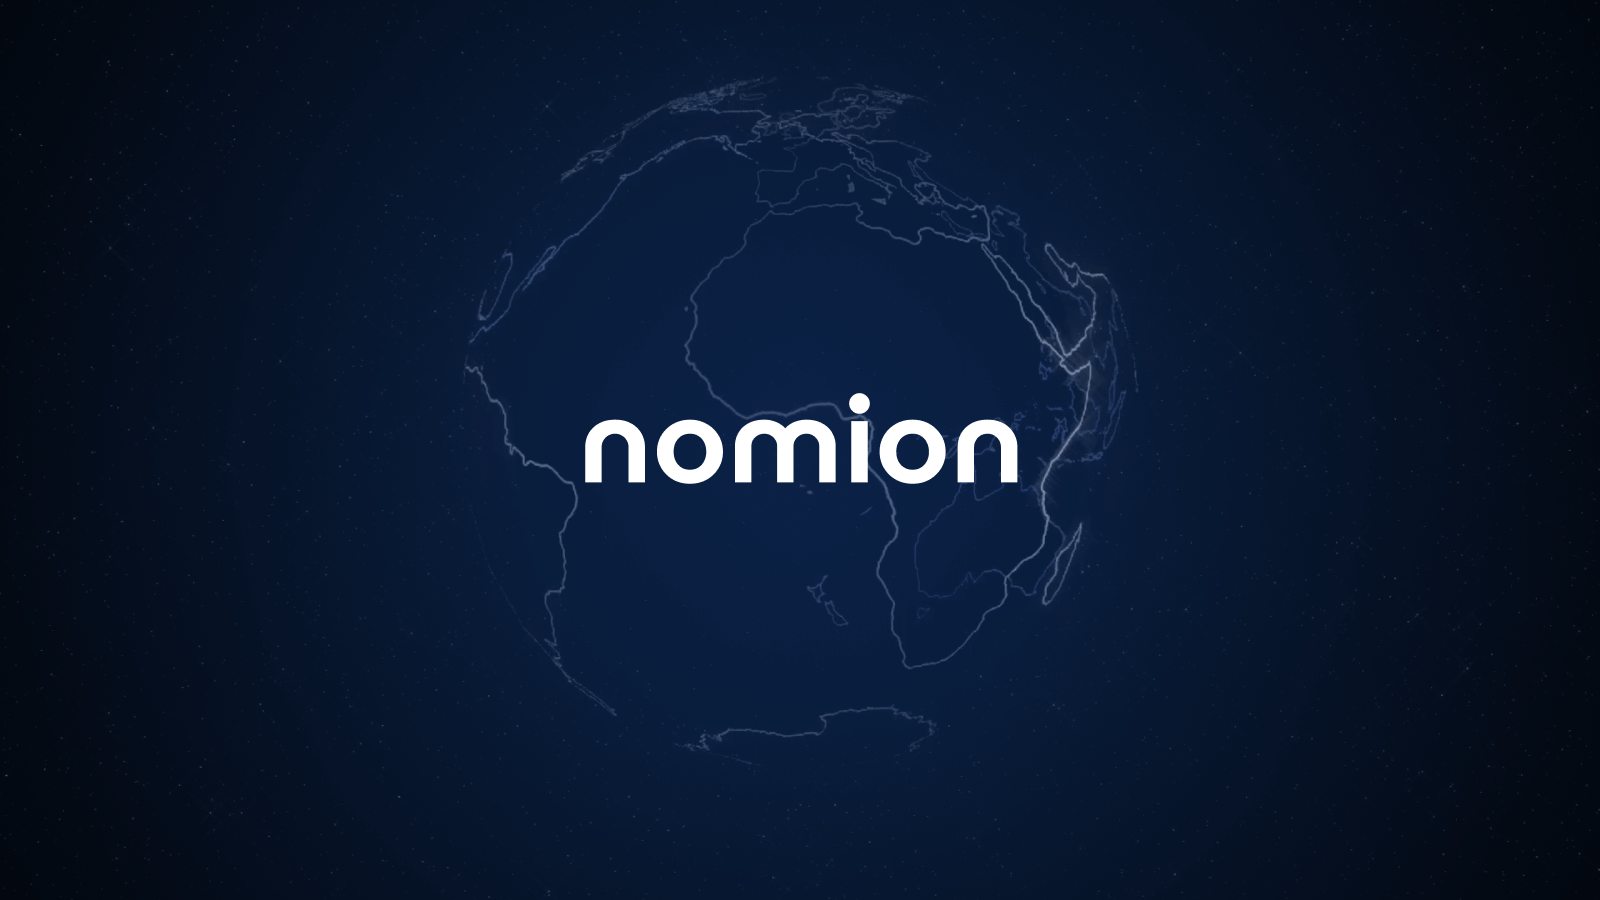 Nomion - Digital Identity